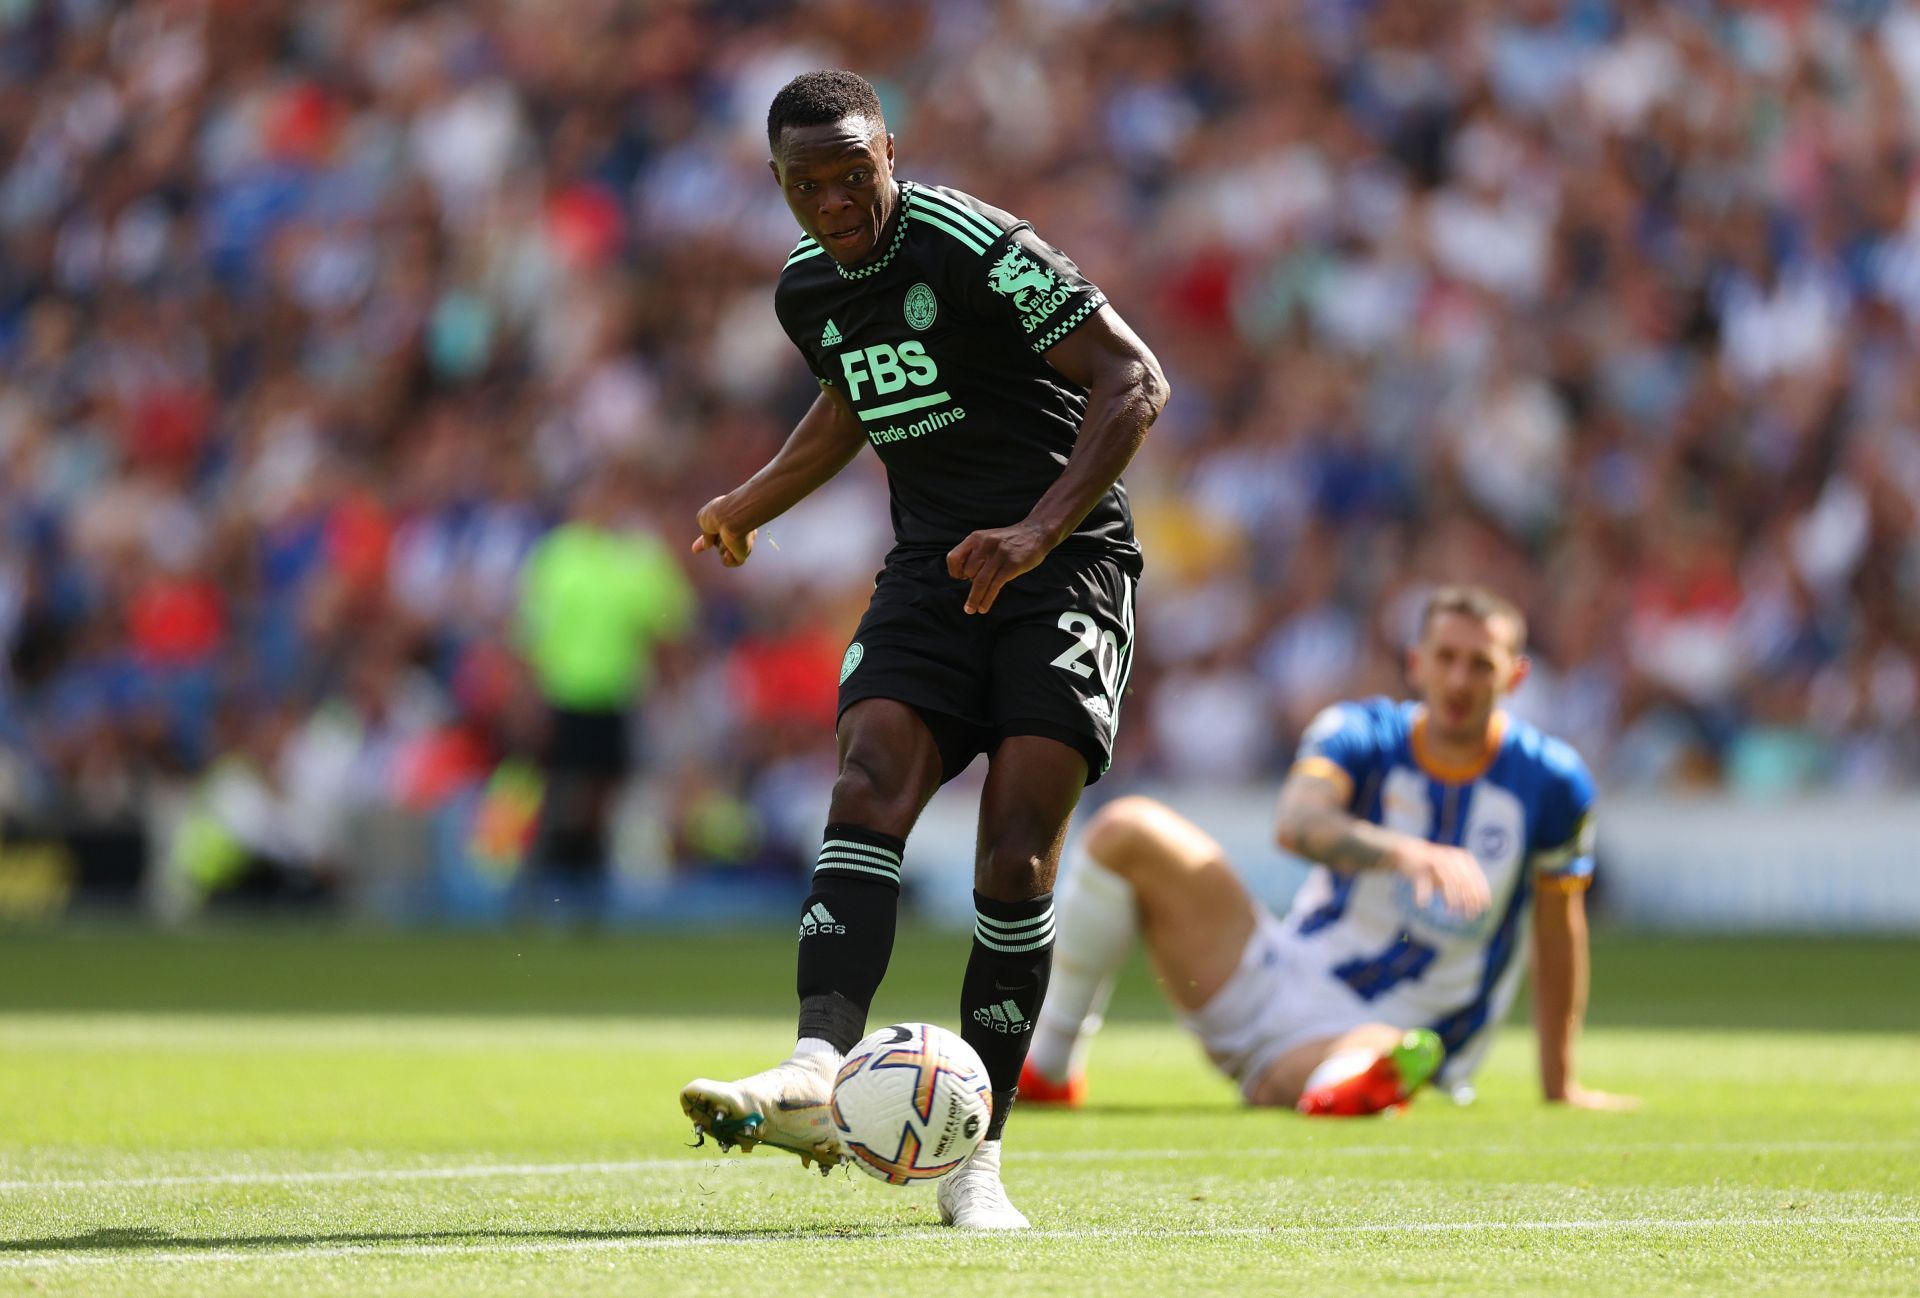 Daka has scored three goals for Leicester City